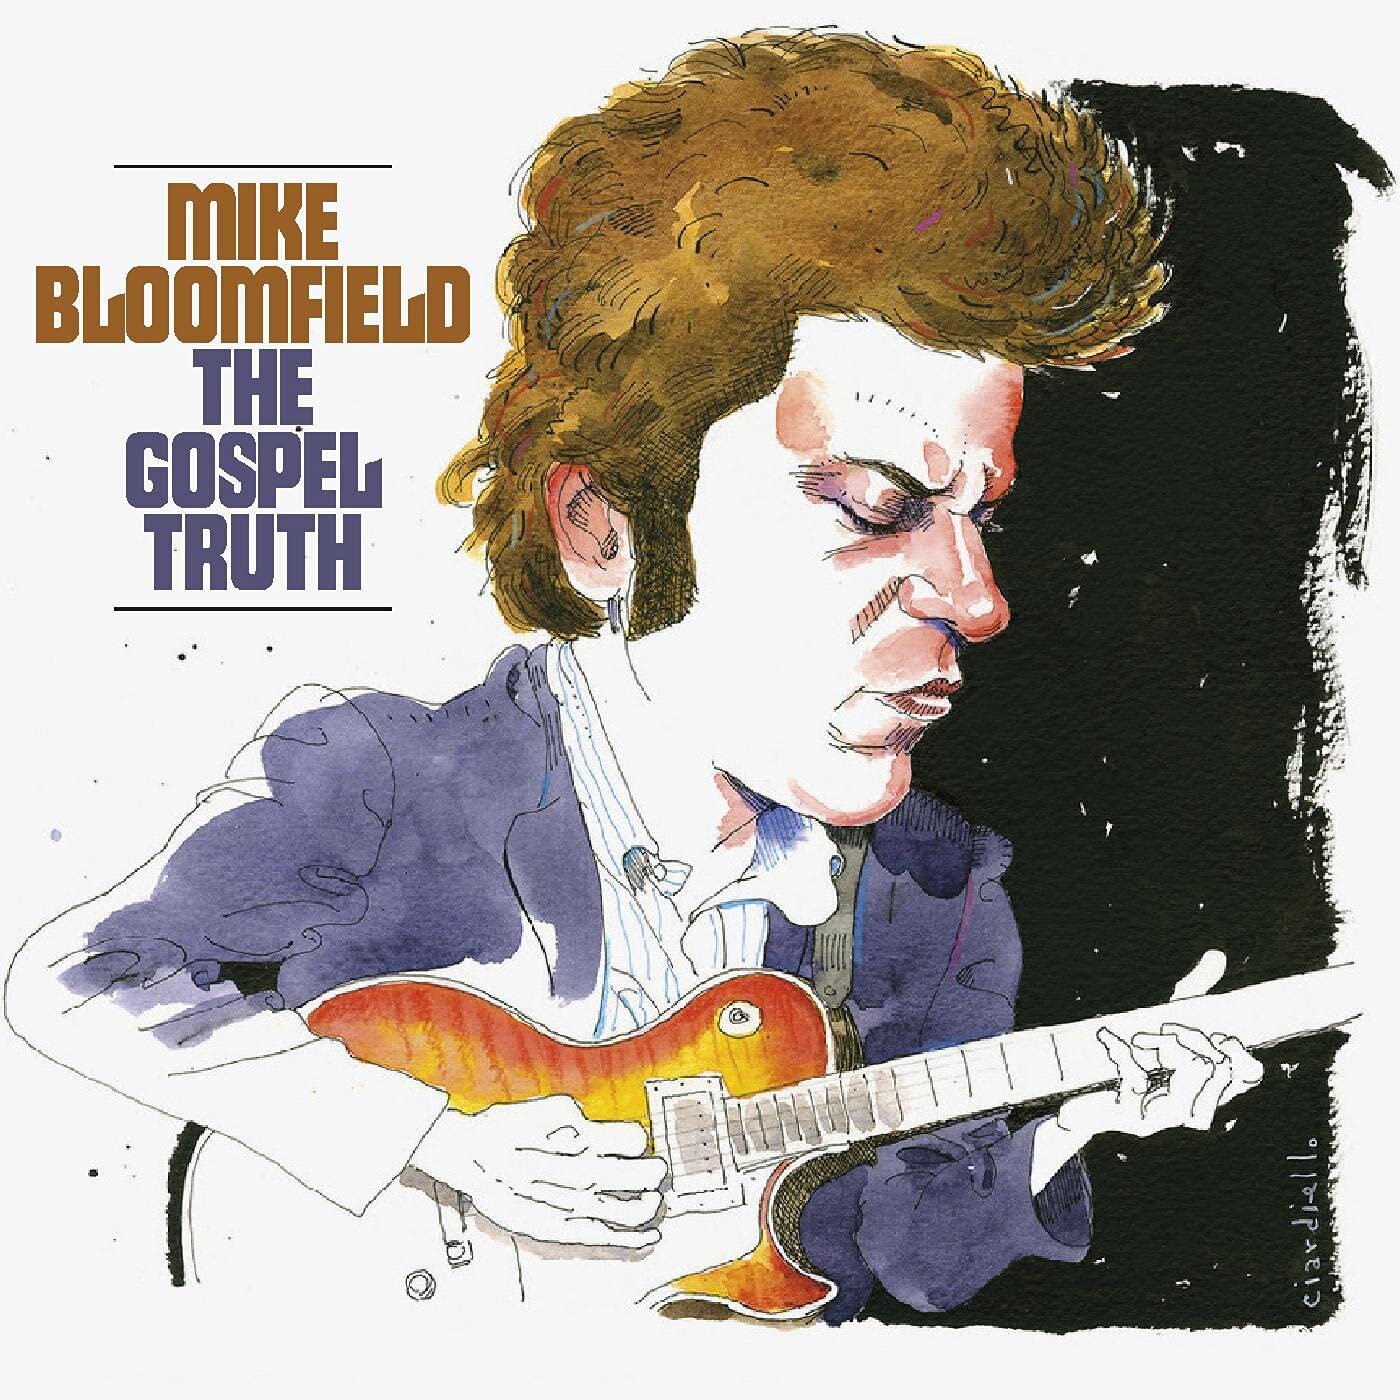 Mike Bloomfield - The Gospel Truth Cover.jpg